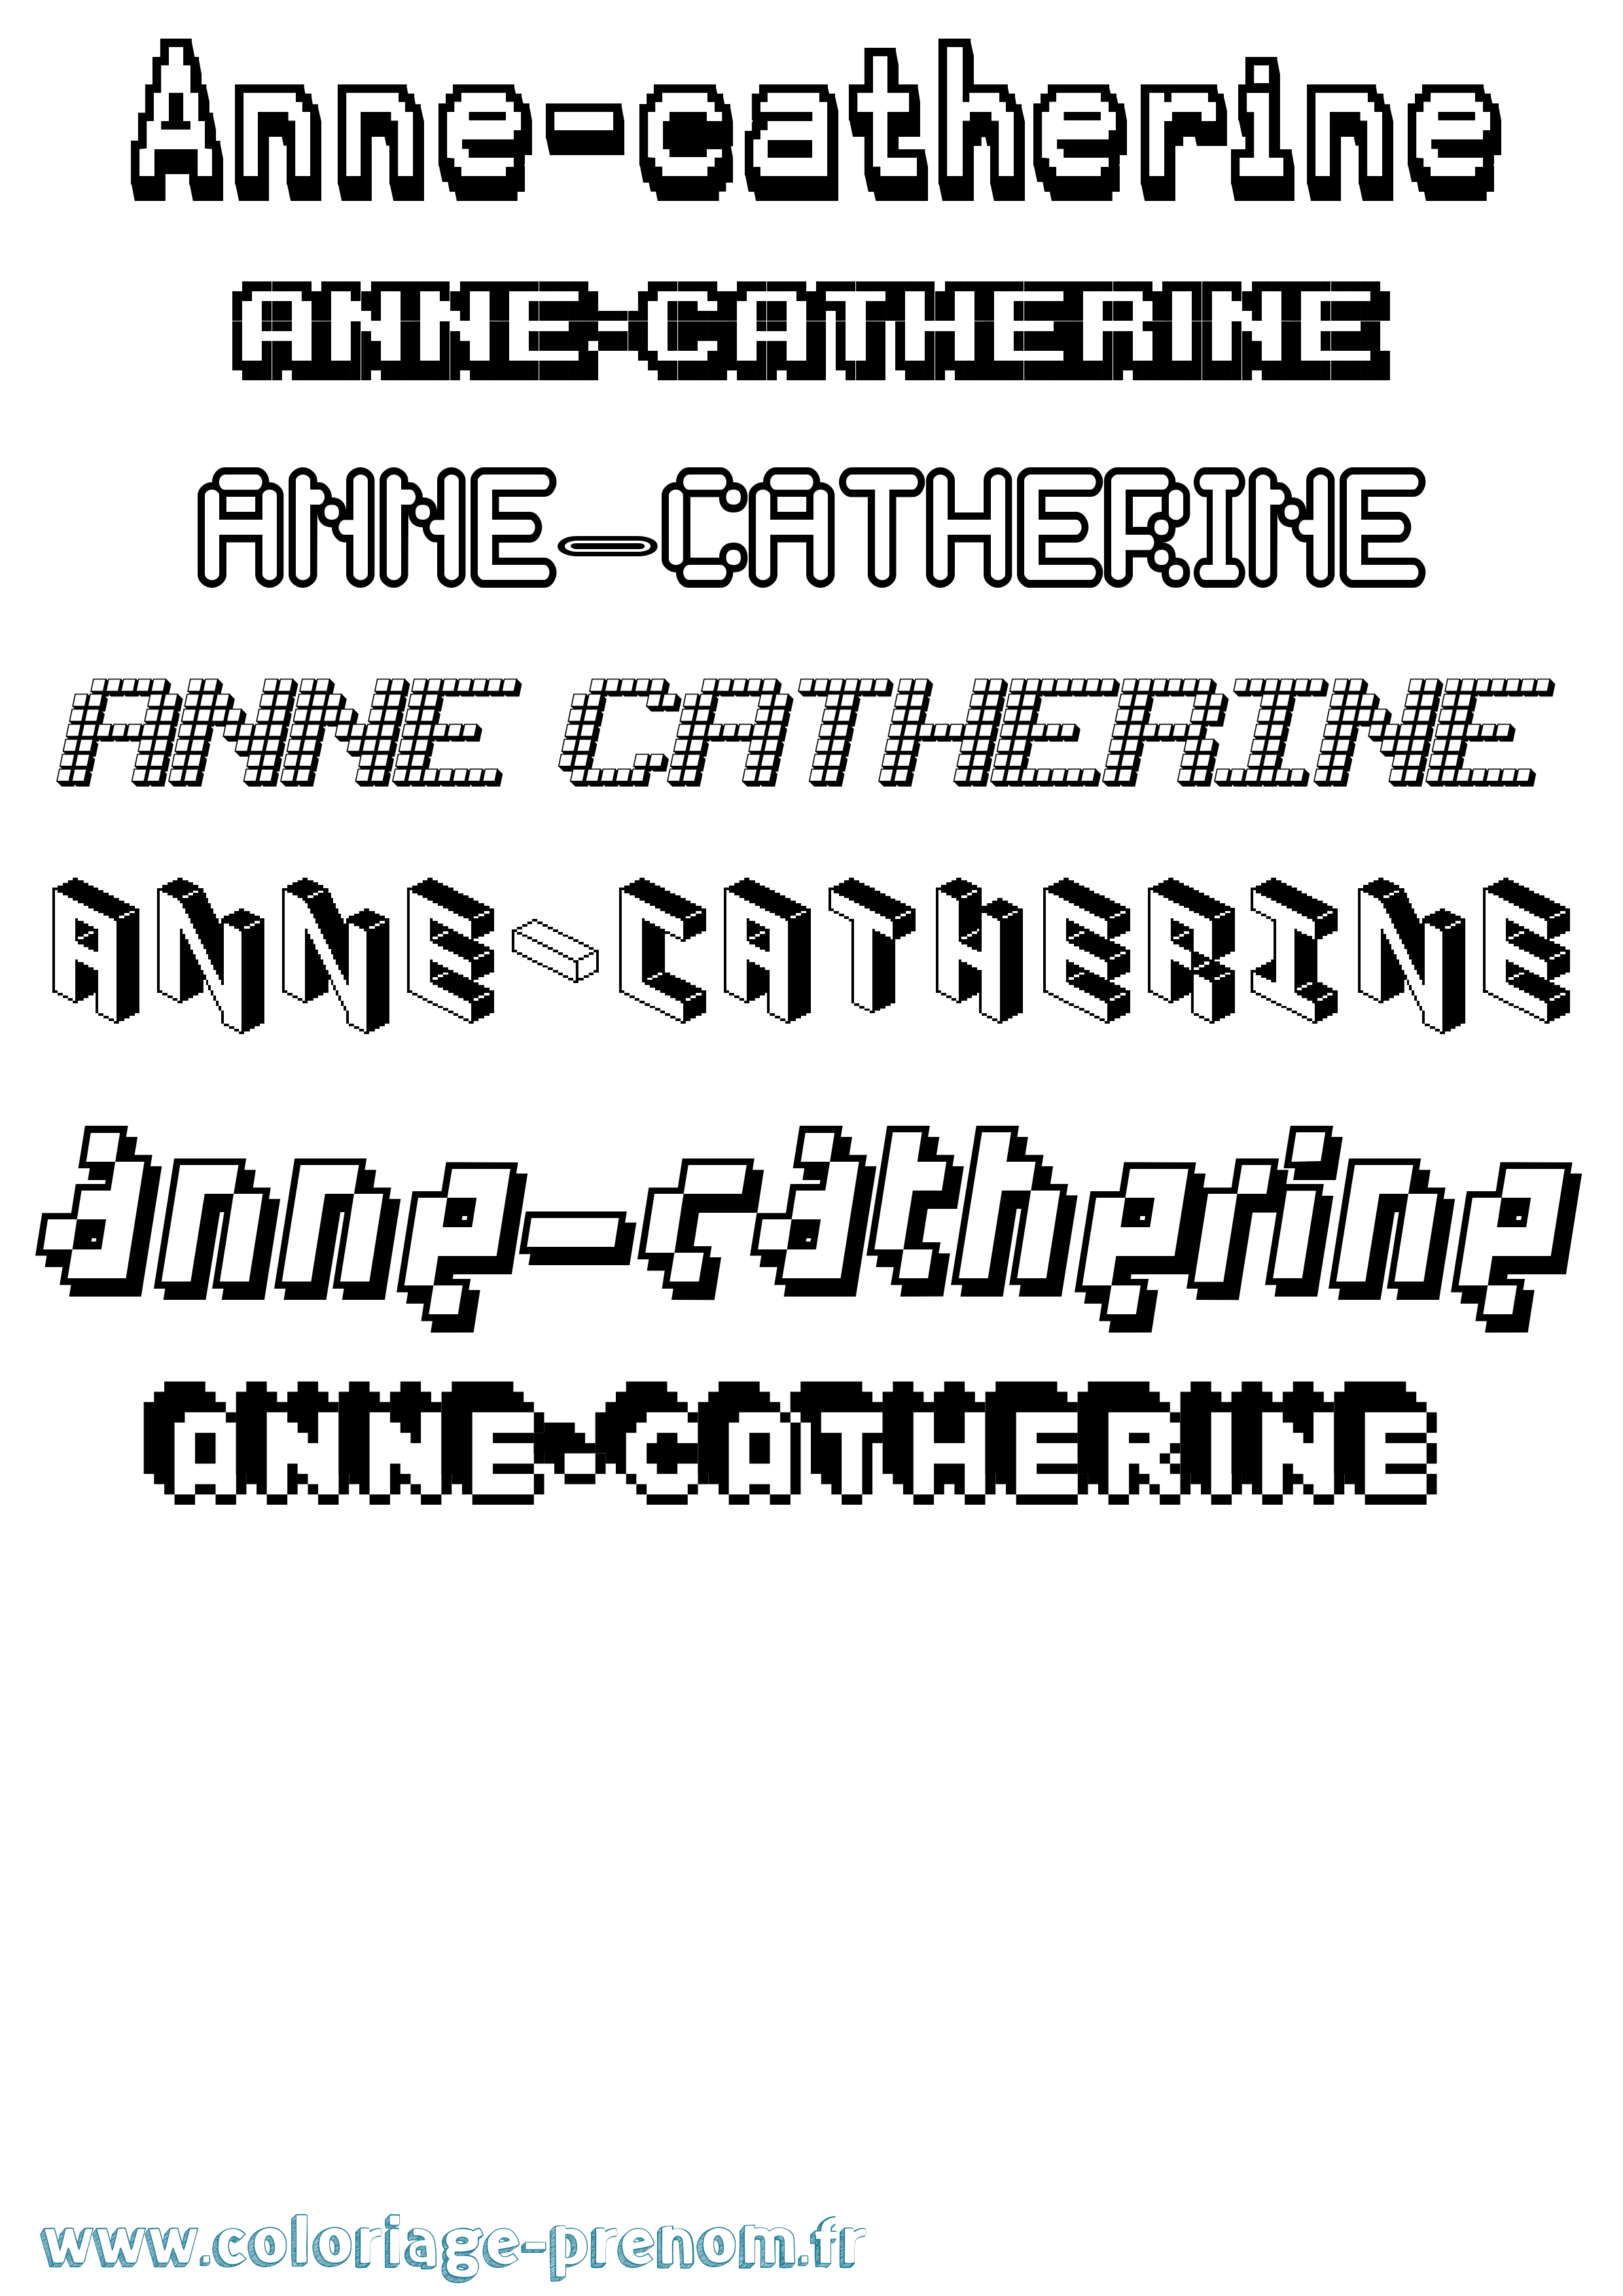 Coloriage prénom Anne-Catherine Pixel